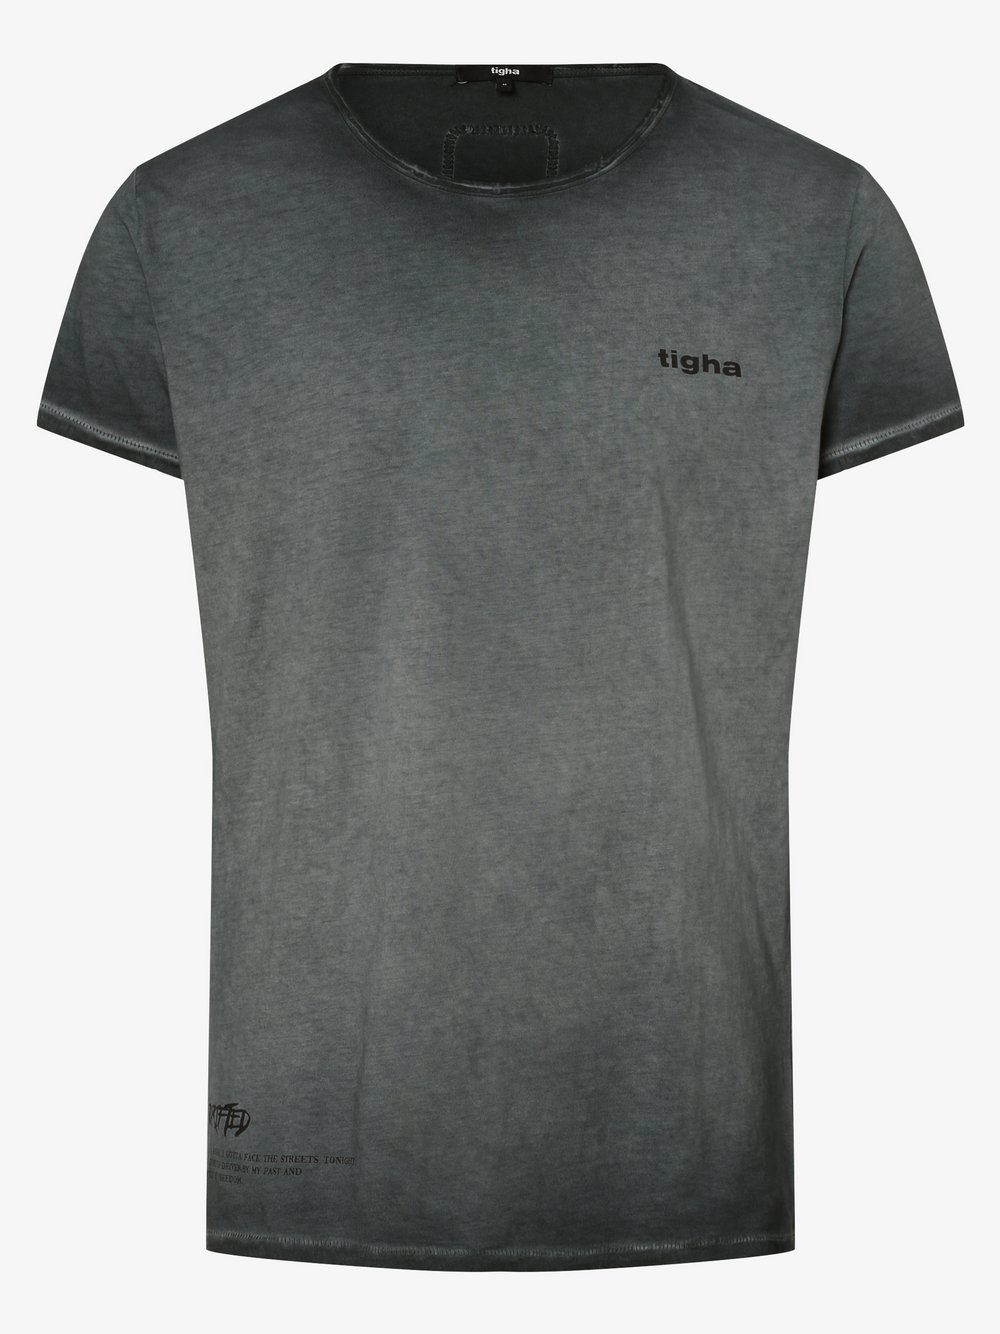 Tigha - T-shirt męski – Vadik, szary